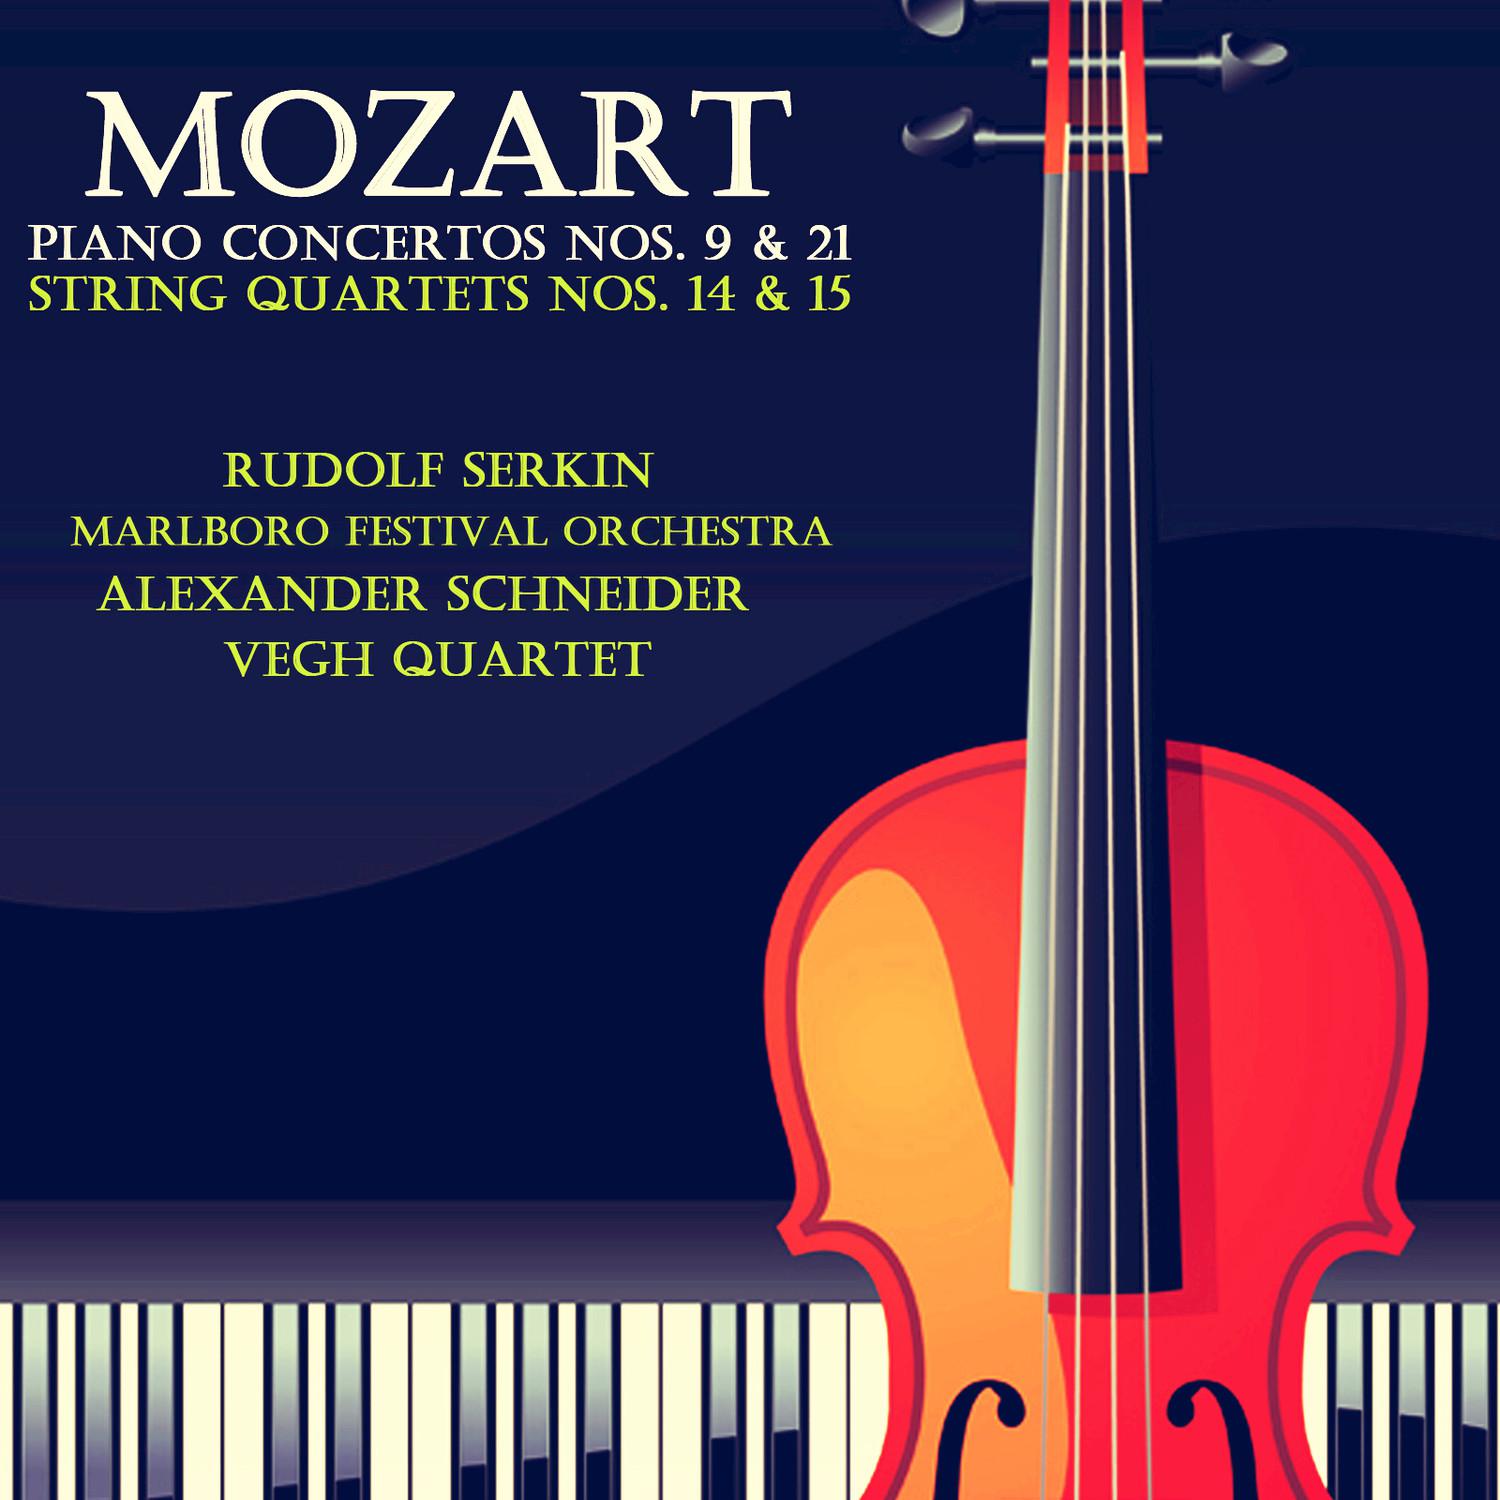 String Quartet No. 14 in G Major, K. 387, "Spring": II. Menuetto